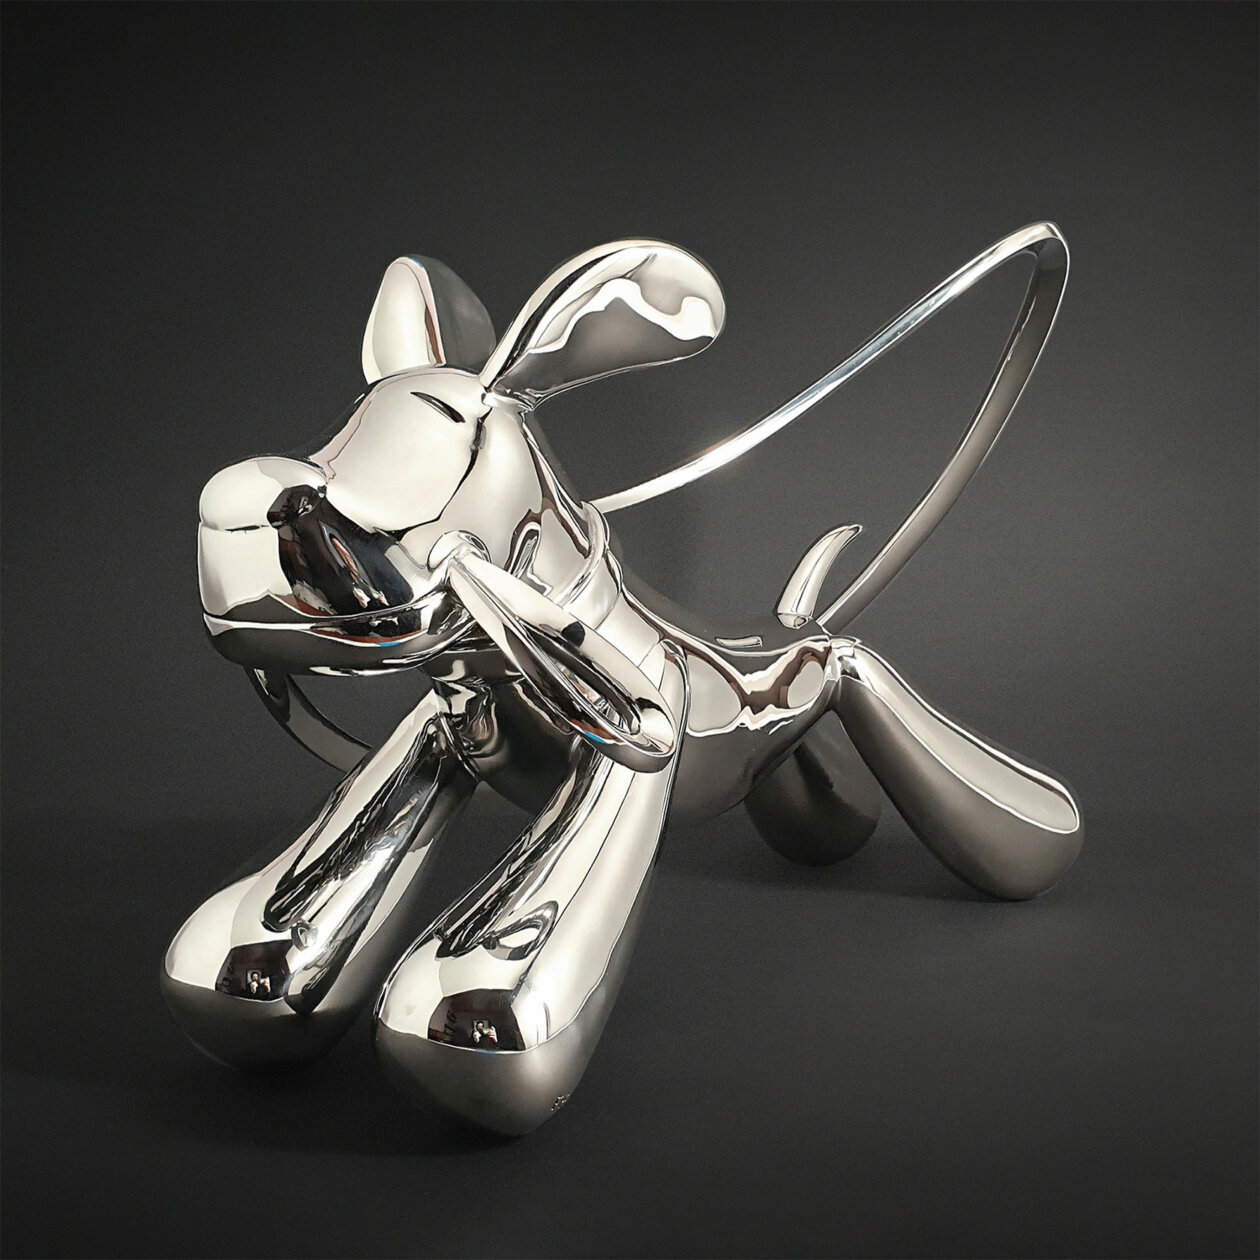 Fun Animal Polished Metal Sculptures By Ferdi B. Dick (15)